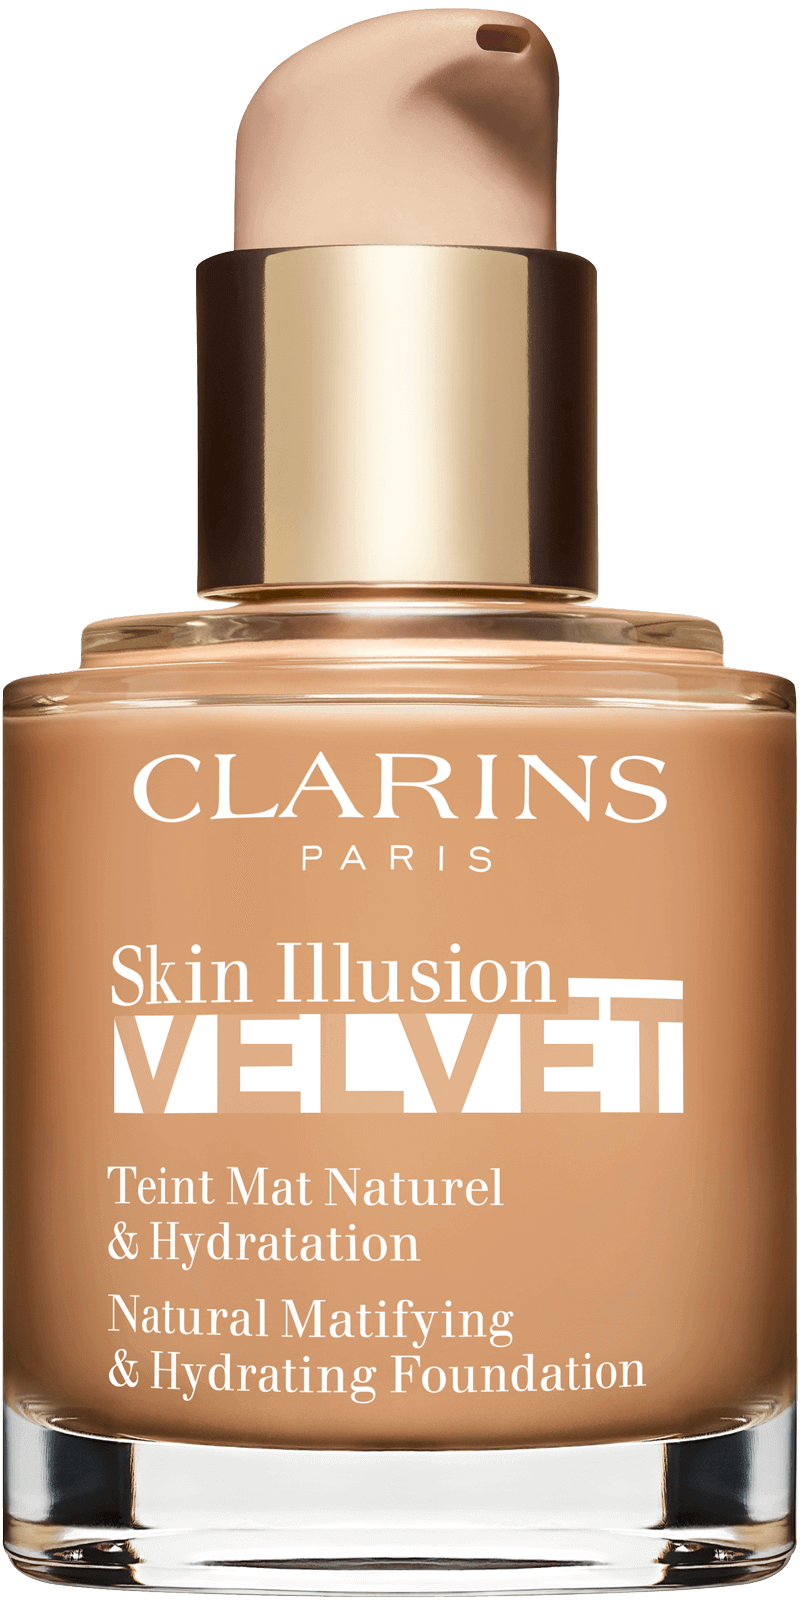 Skin Illusion Velvet Textur